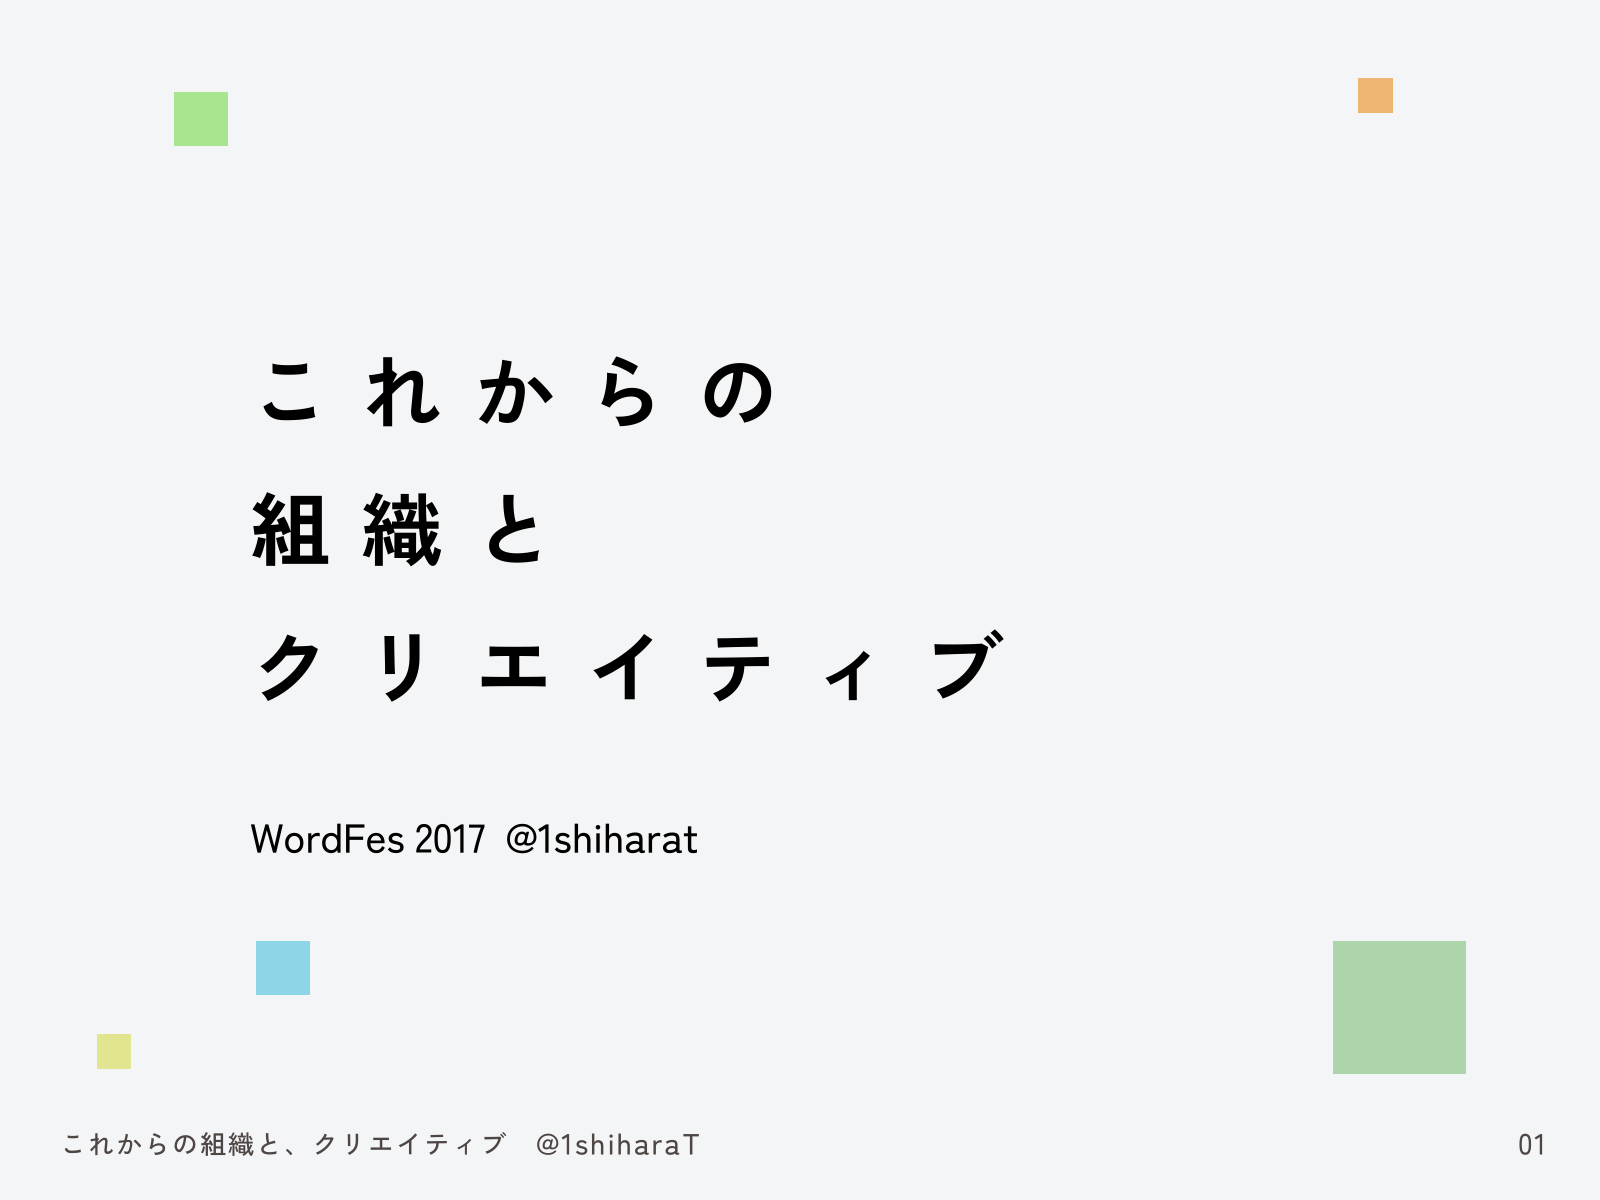 WordFes Nagoya 2017 で「これからの組織とクリエイティブ」という題で登壇してきました！